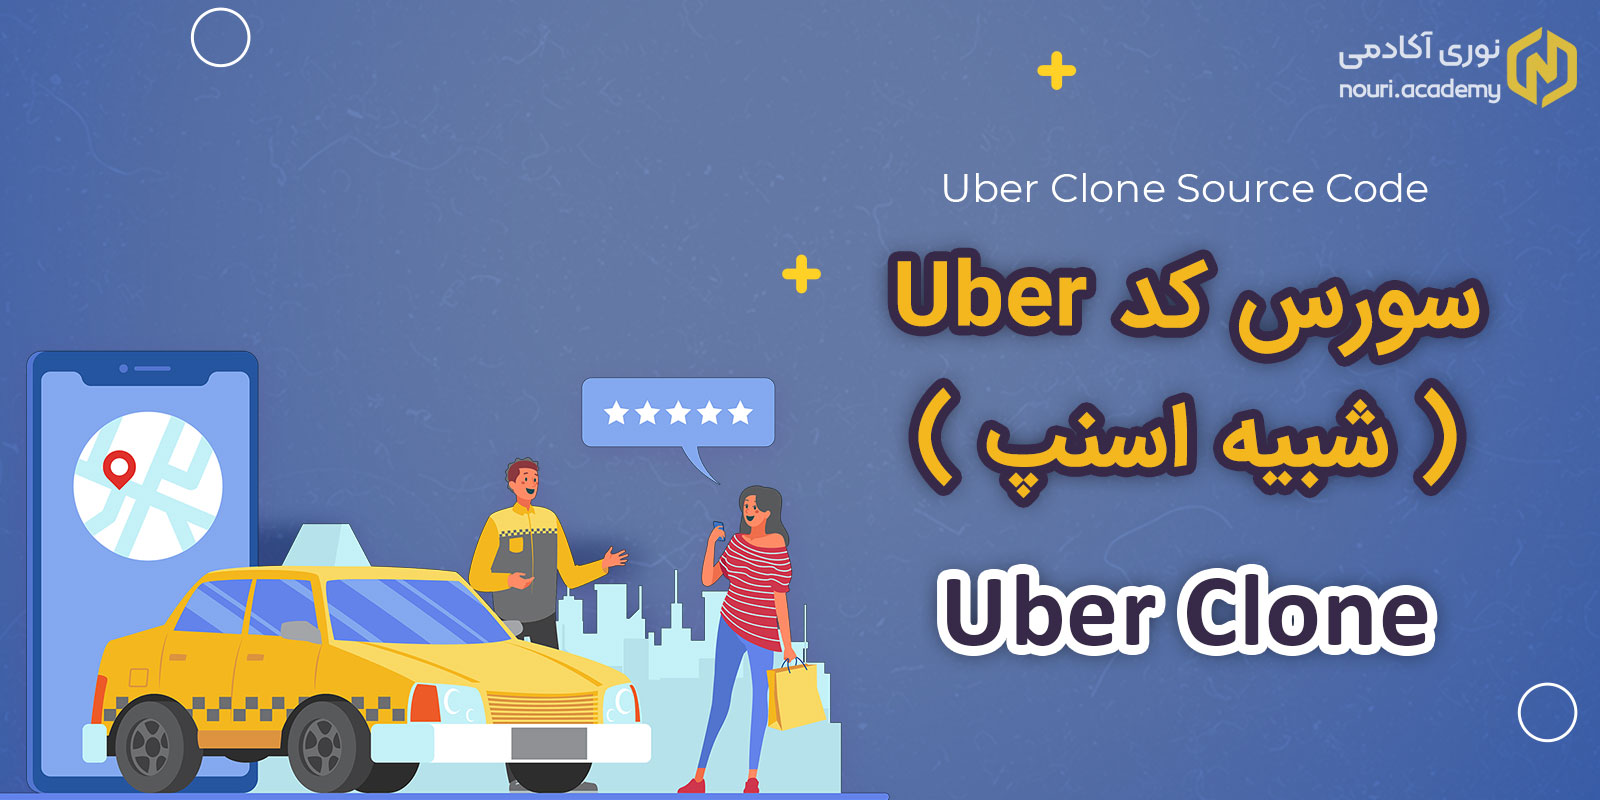 سورس کد اندروید Uber - رزرو تاکسی شبیه اسنپ